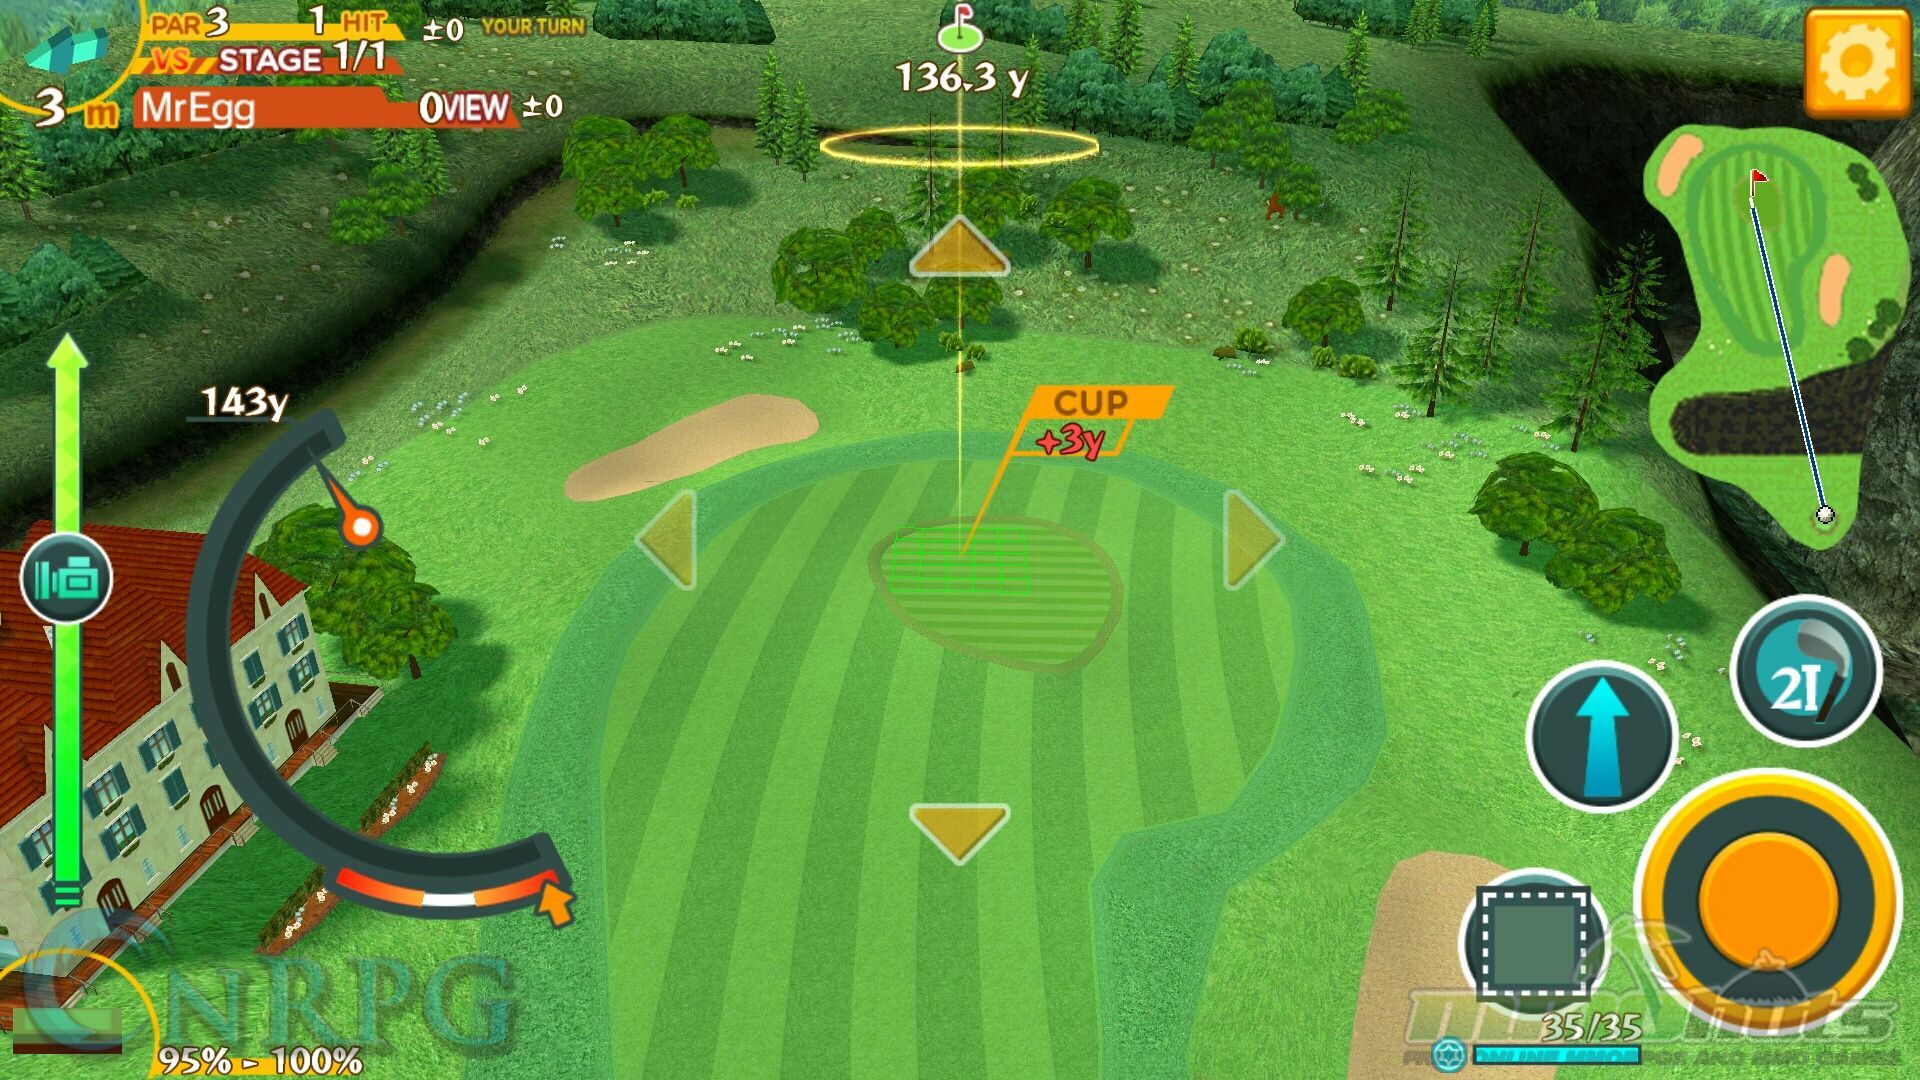 Eagle: Fatasy Golf Mobile Game Review